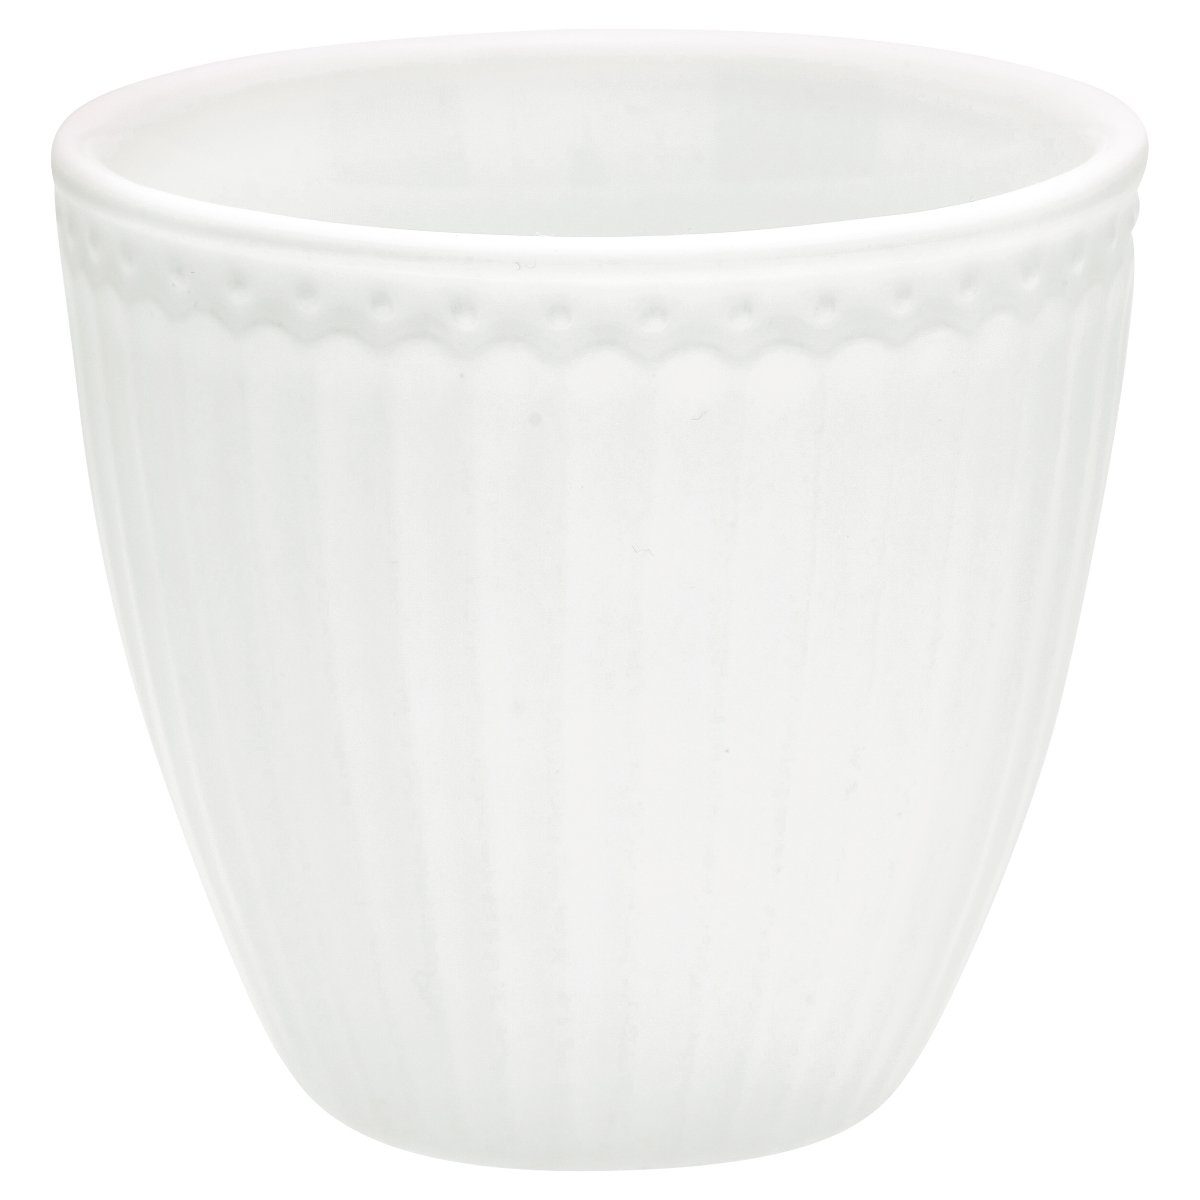 Greengate Becher Alice Latte Cup white 9 cm, Porzellan